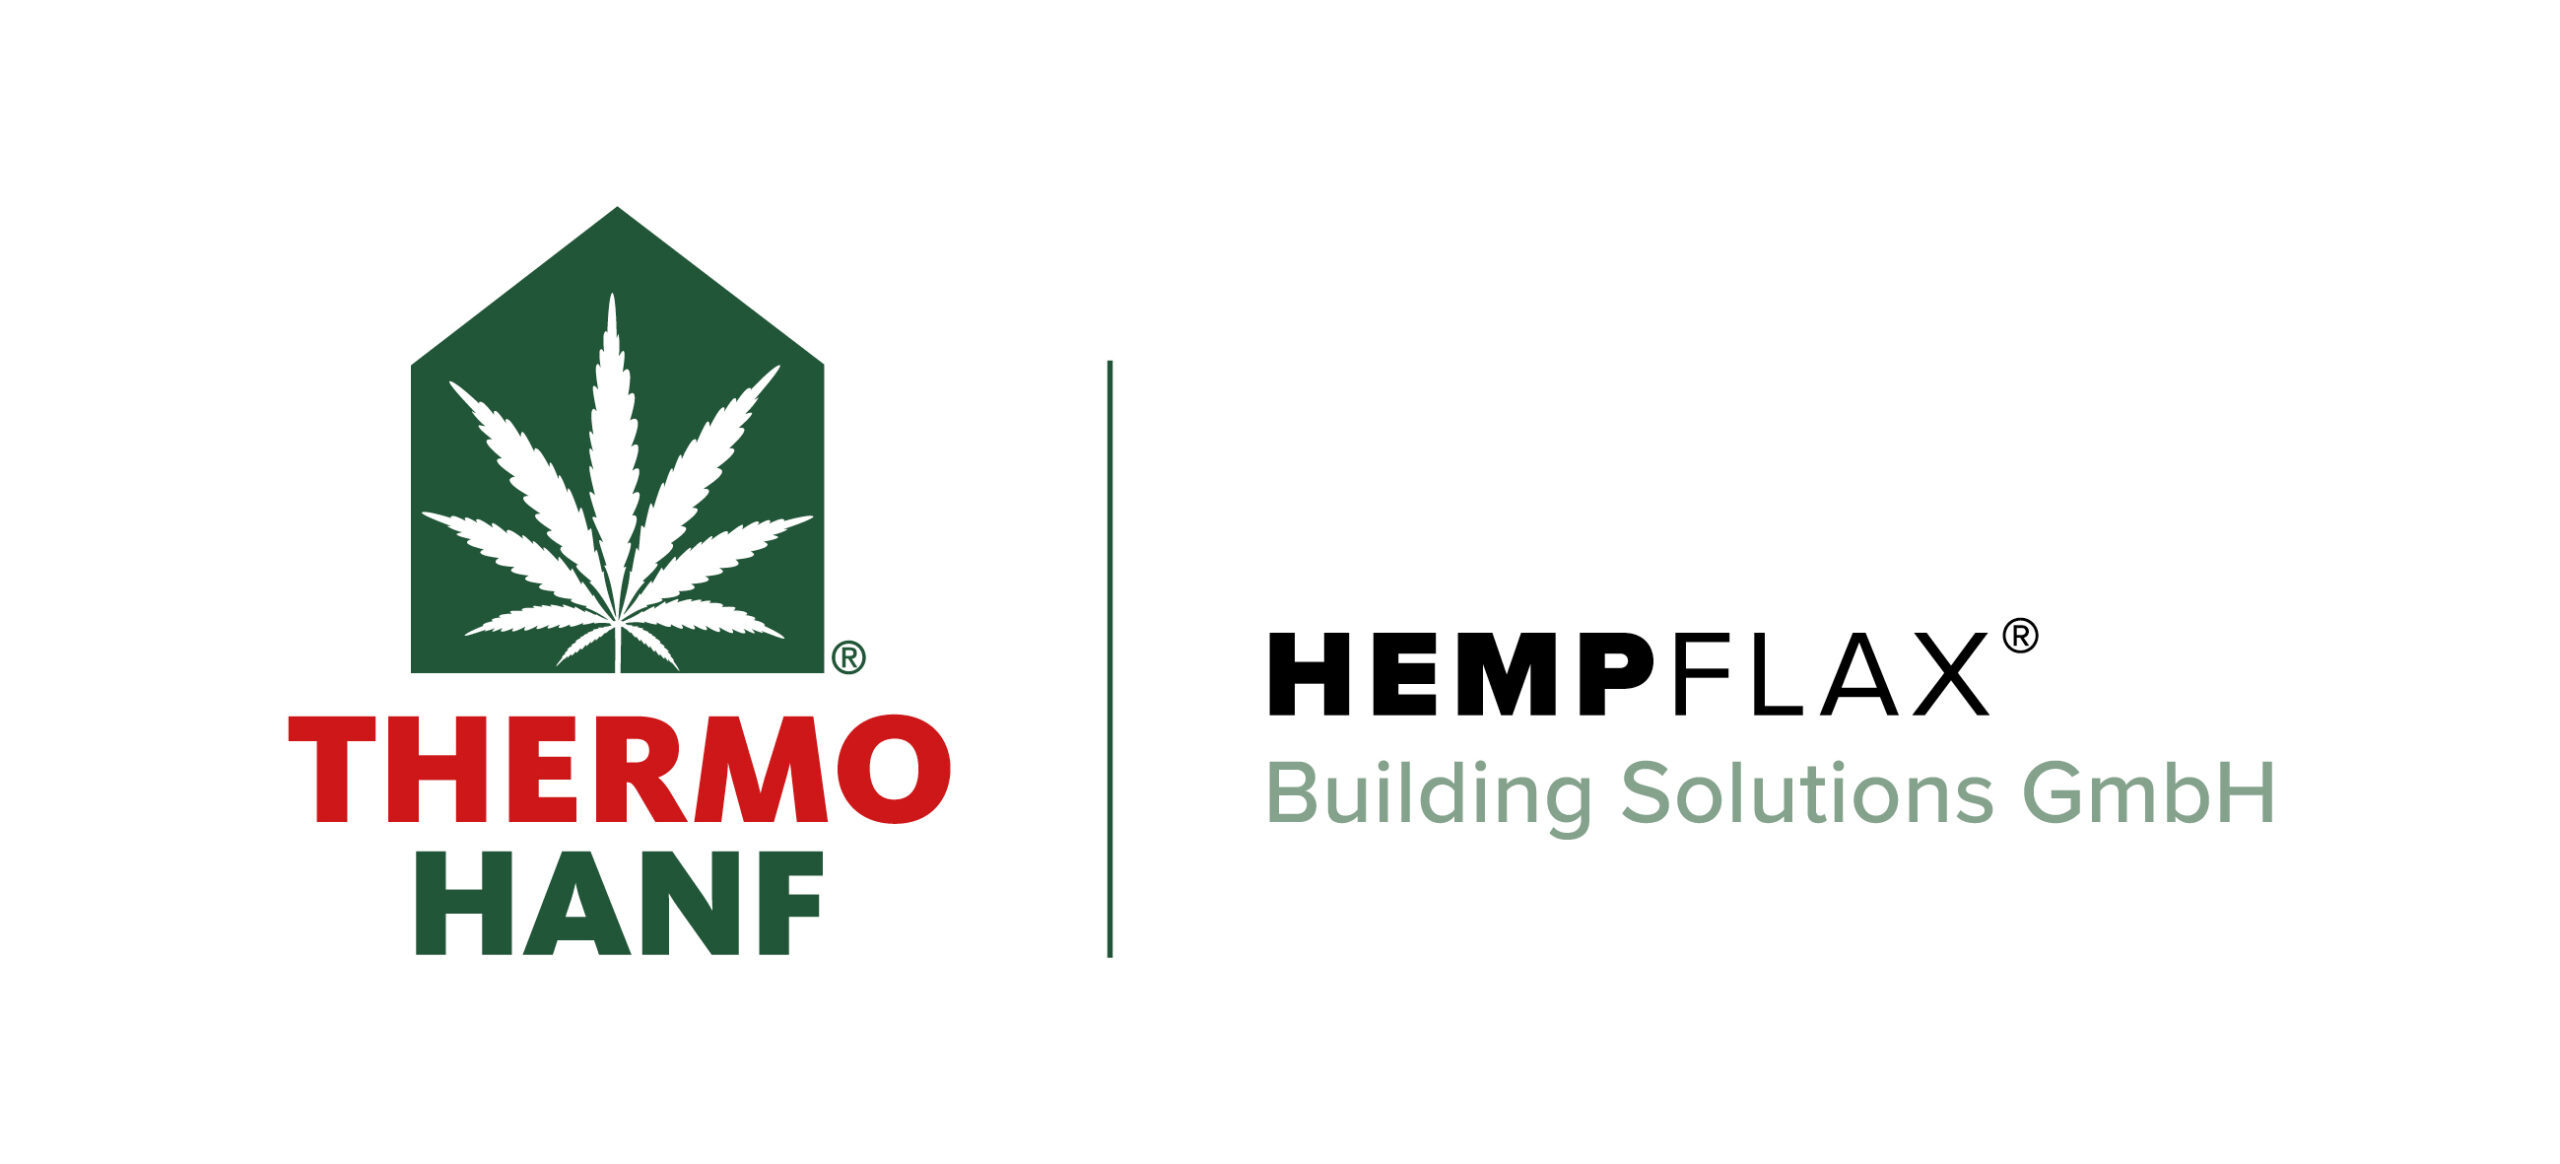 HempFlax Building Solutions GmbH